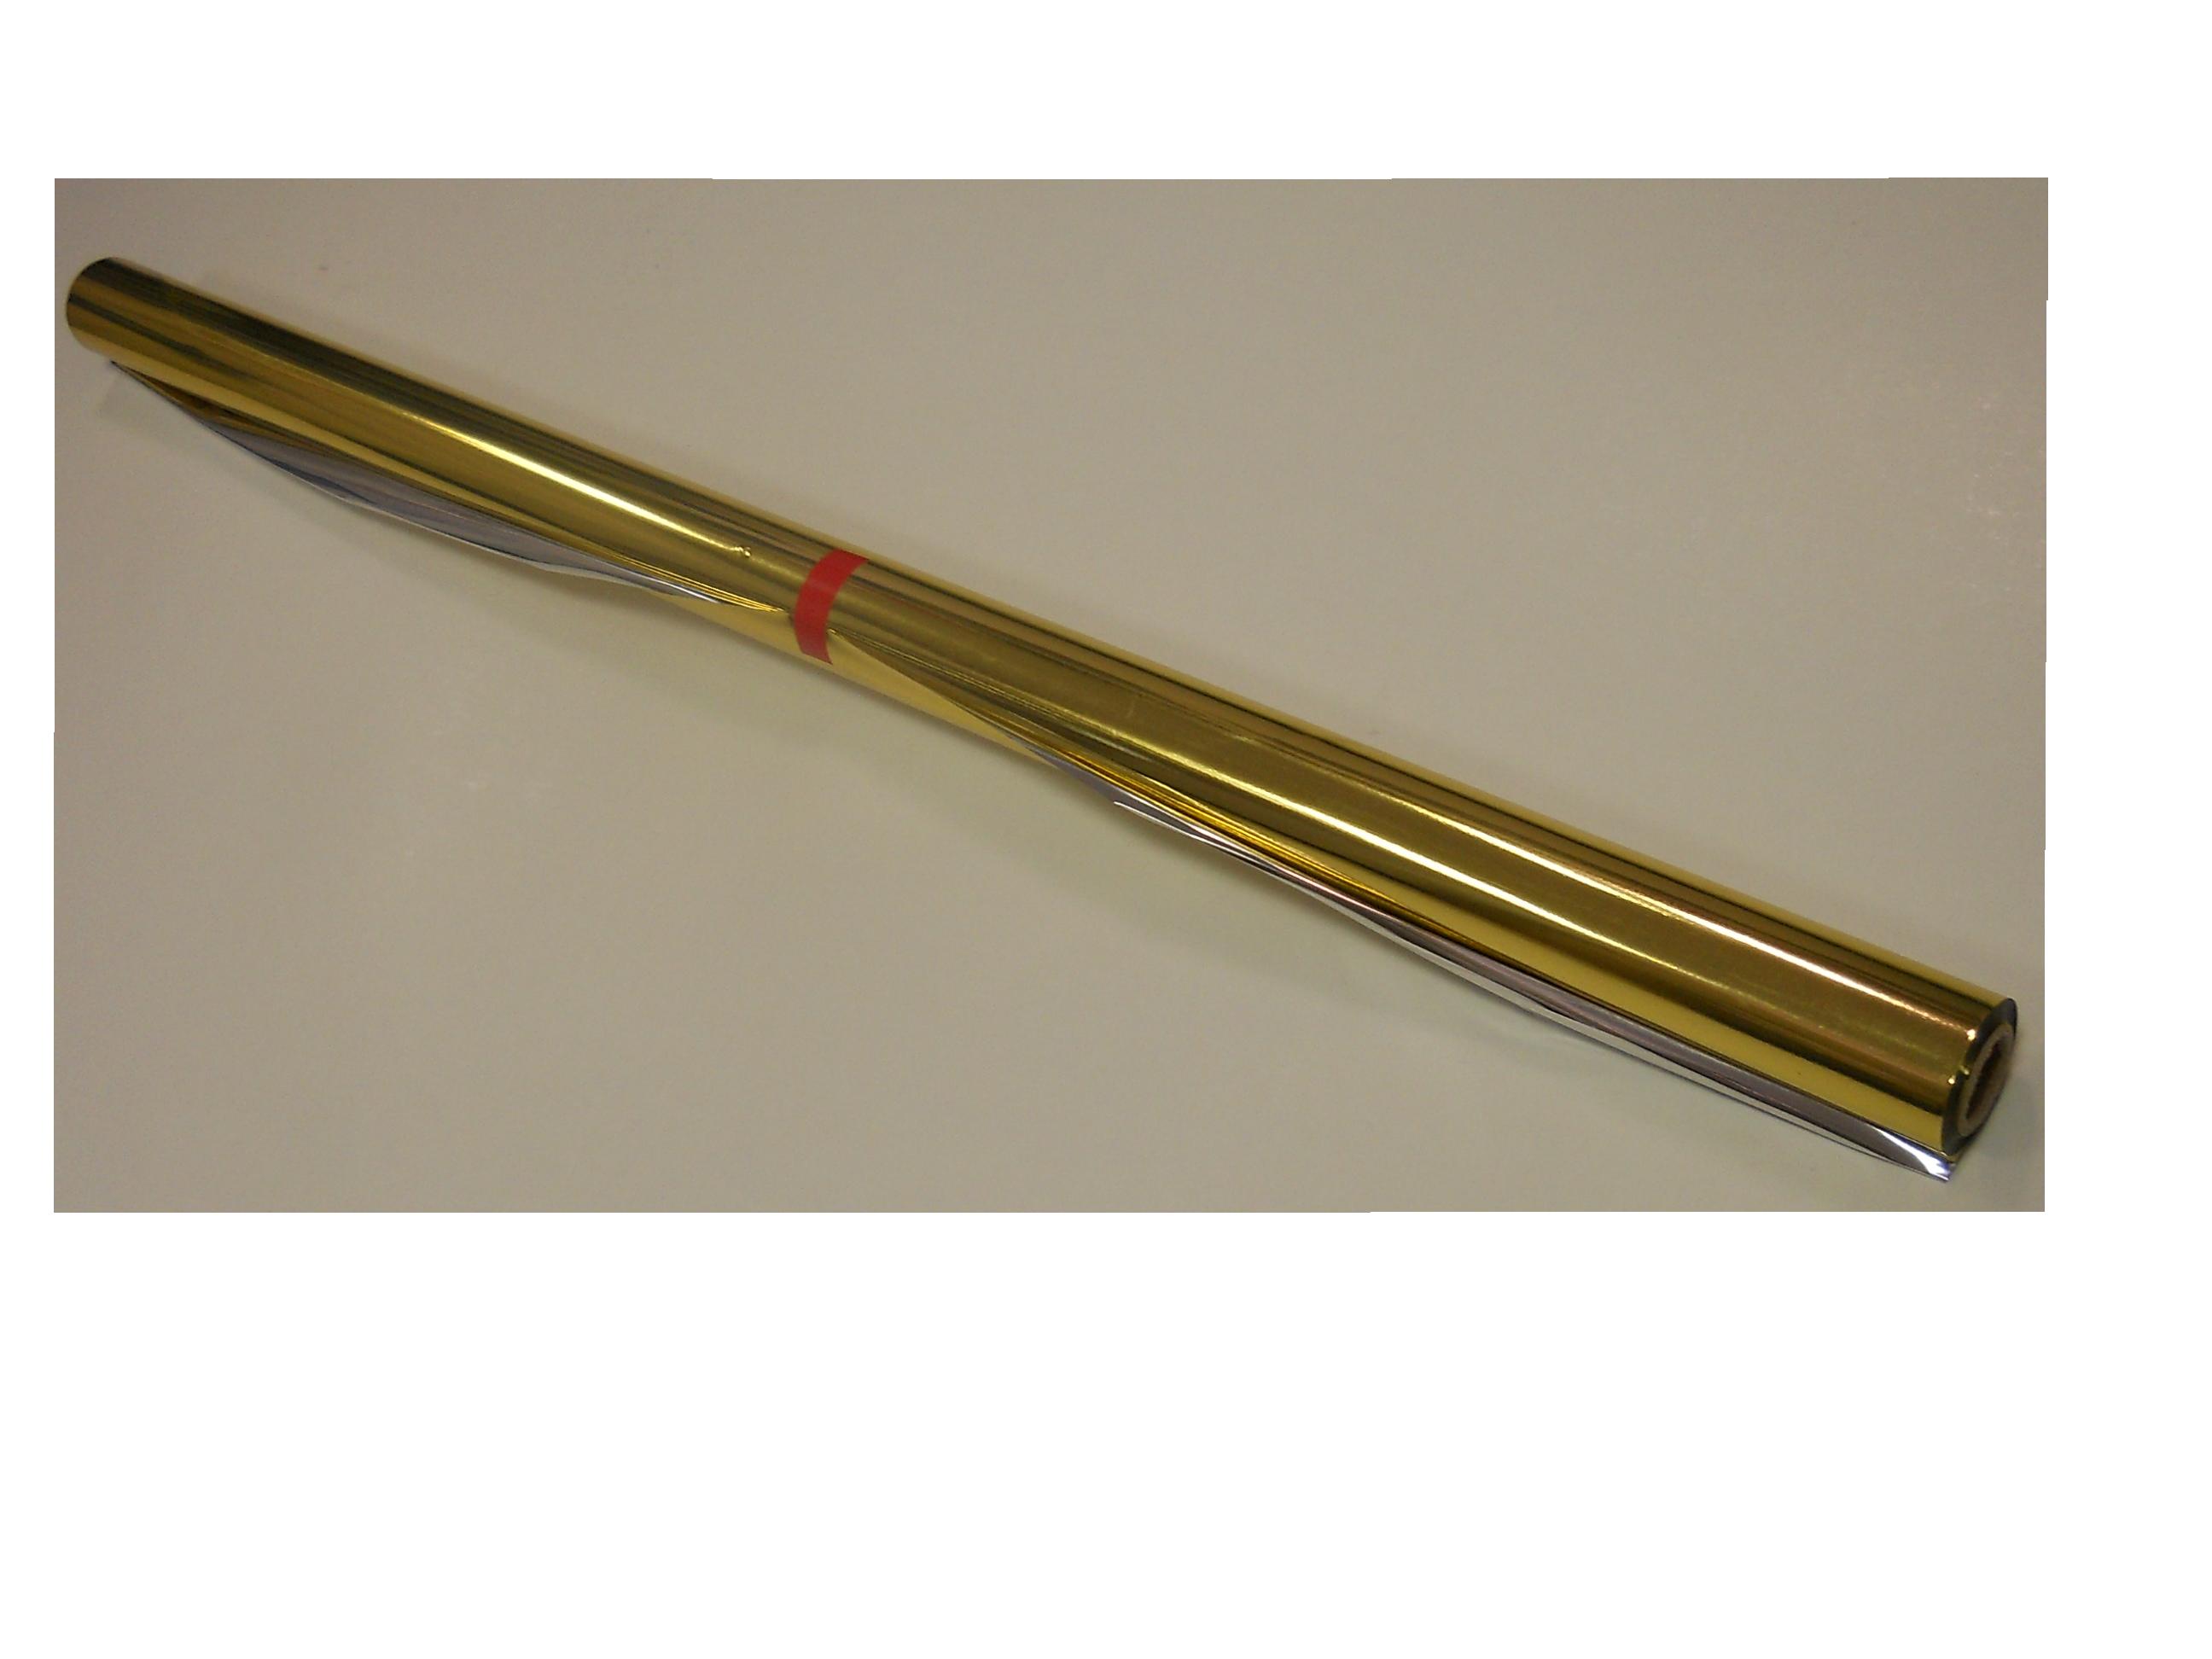 Baliaci Celofán metafán zlatý 1 rolka š 70 cm / dl.10 m  9,99 EUR s DPH rol.